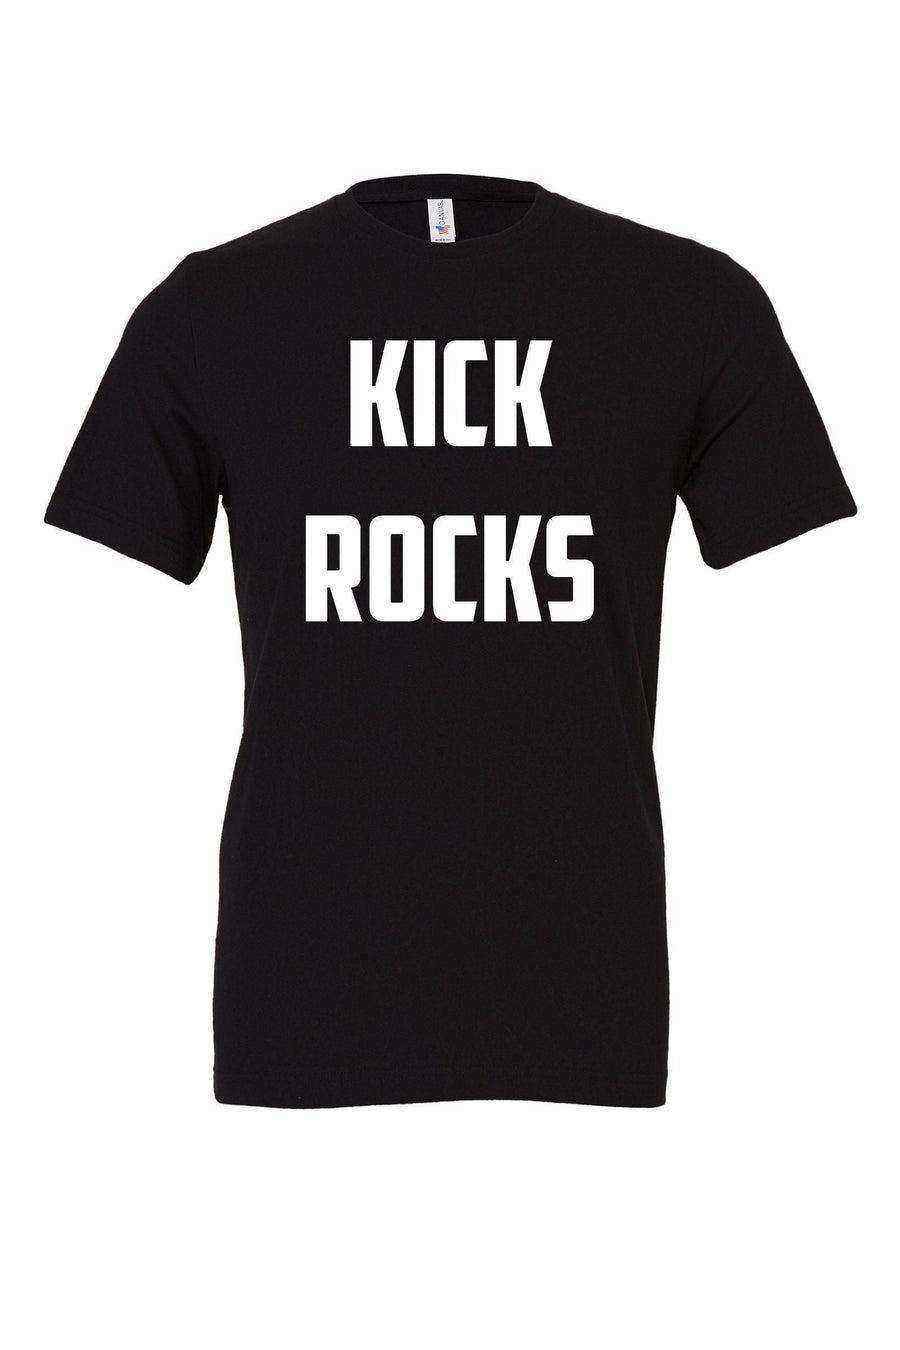 Kick Rocks Shirt | Kick Rocks Tee | Quote Shirt - Dylan's Tees